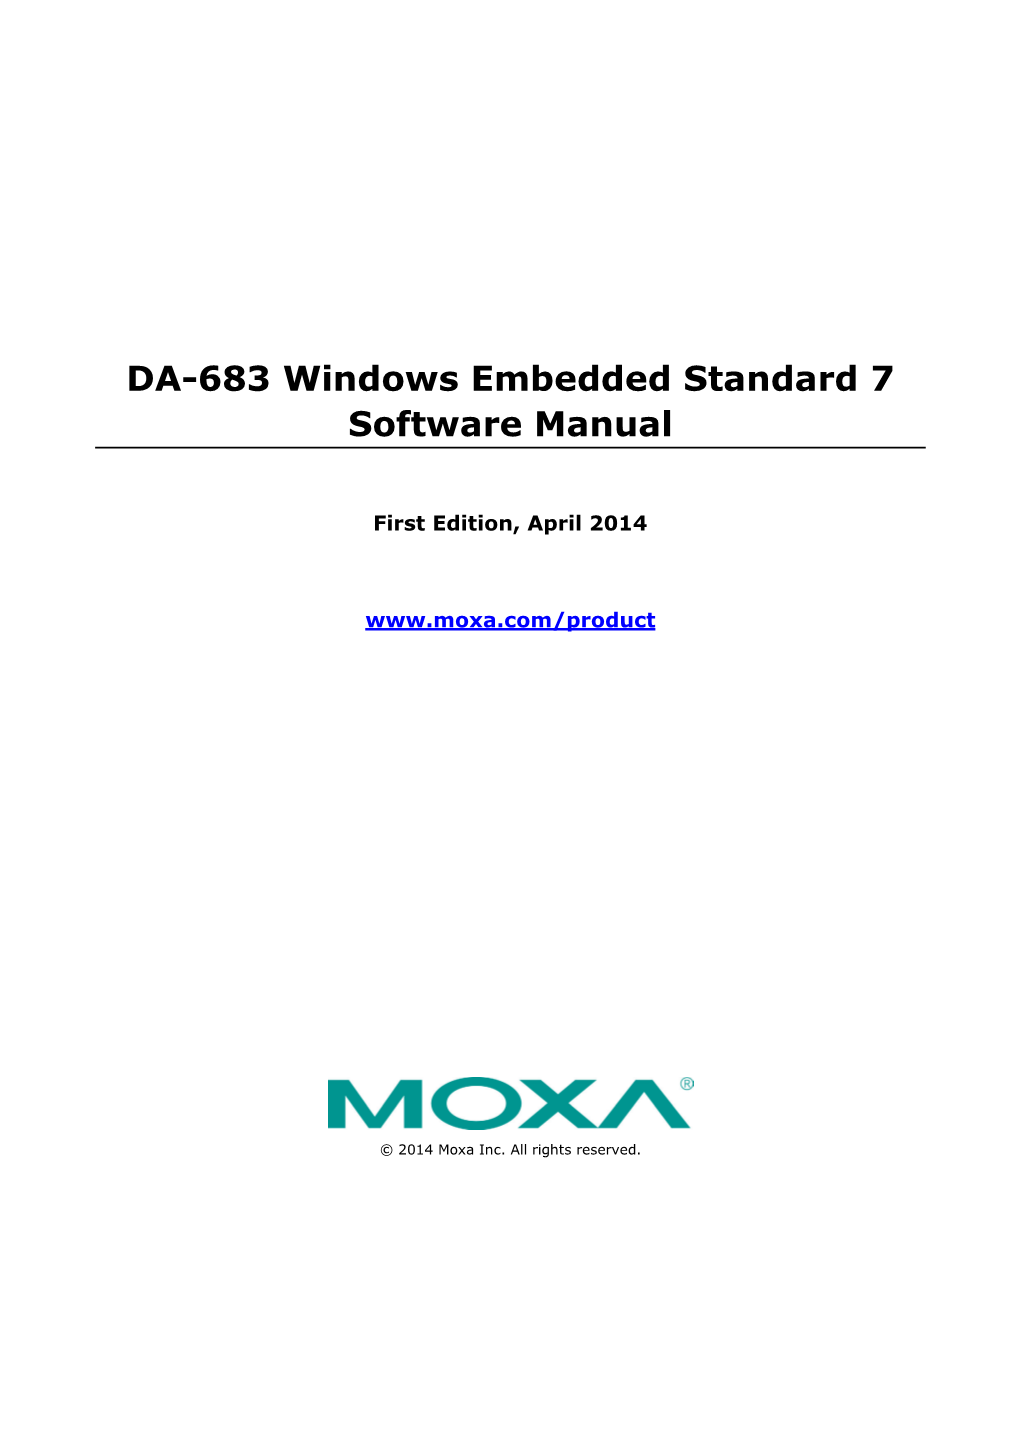 DA-683 Windows Embedded Standard 7 Software Manual